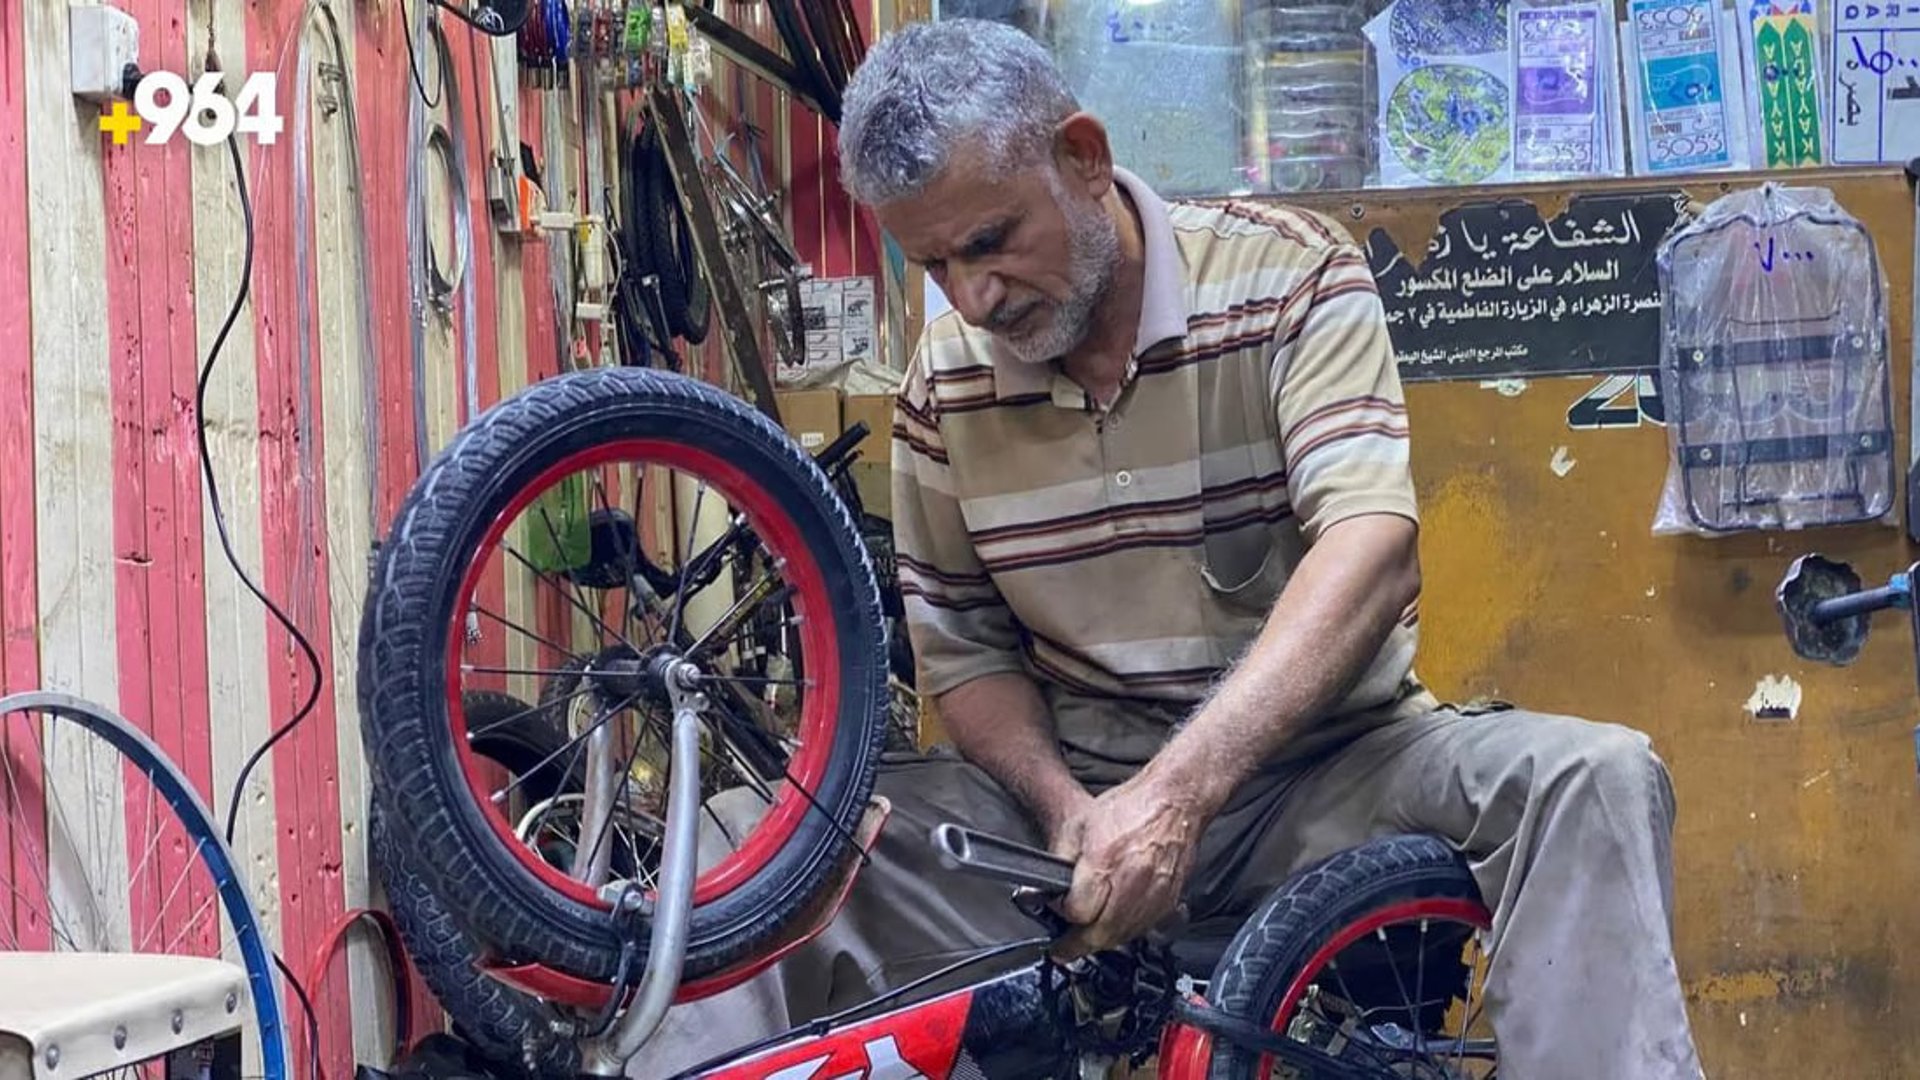 Abu Ahmad Basras veteran bicycle mechanic